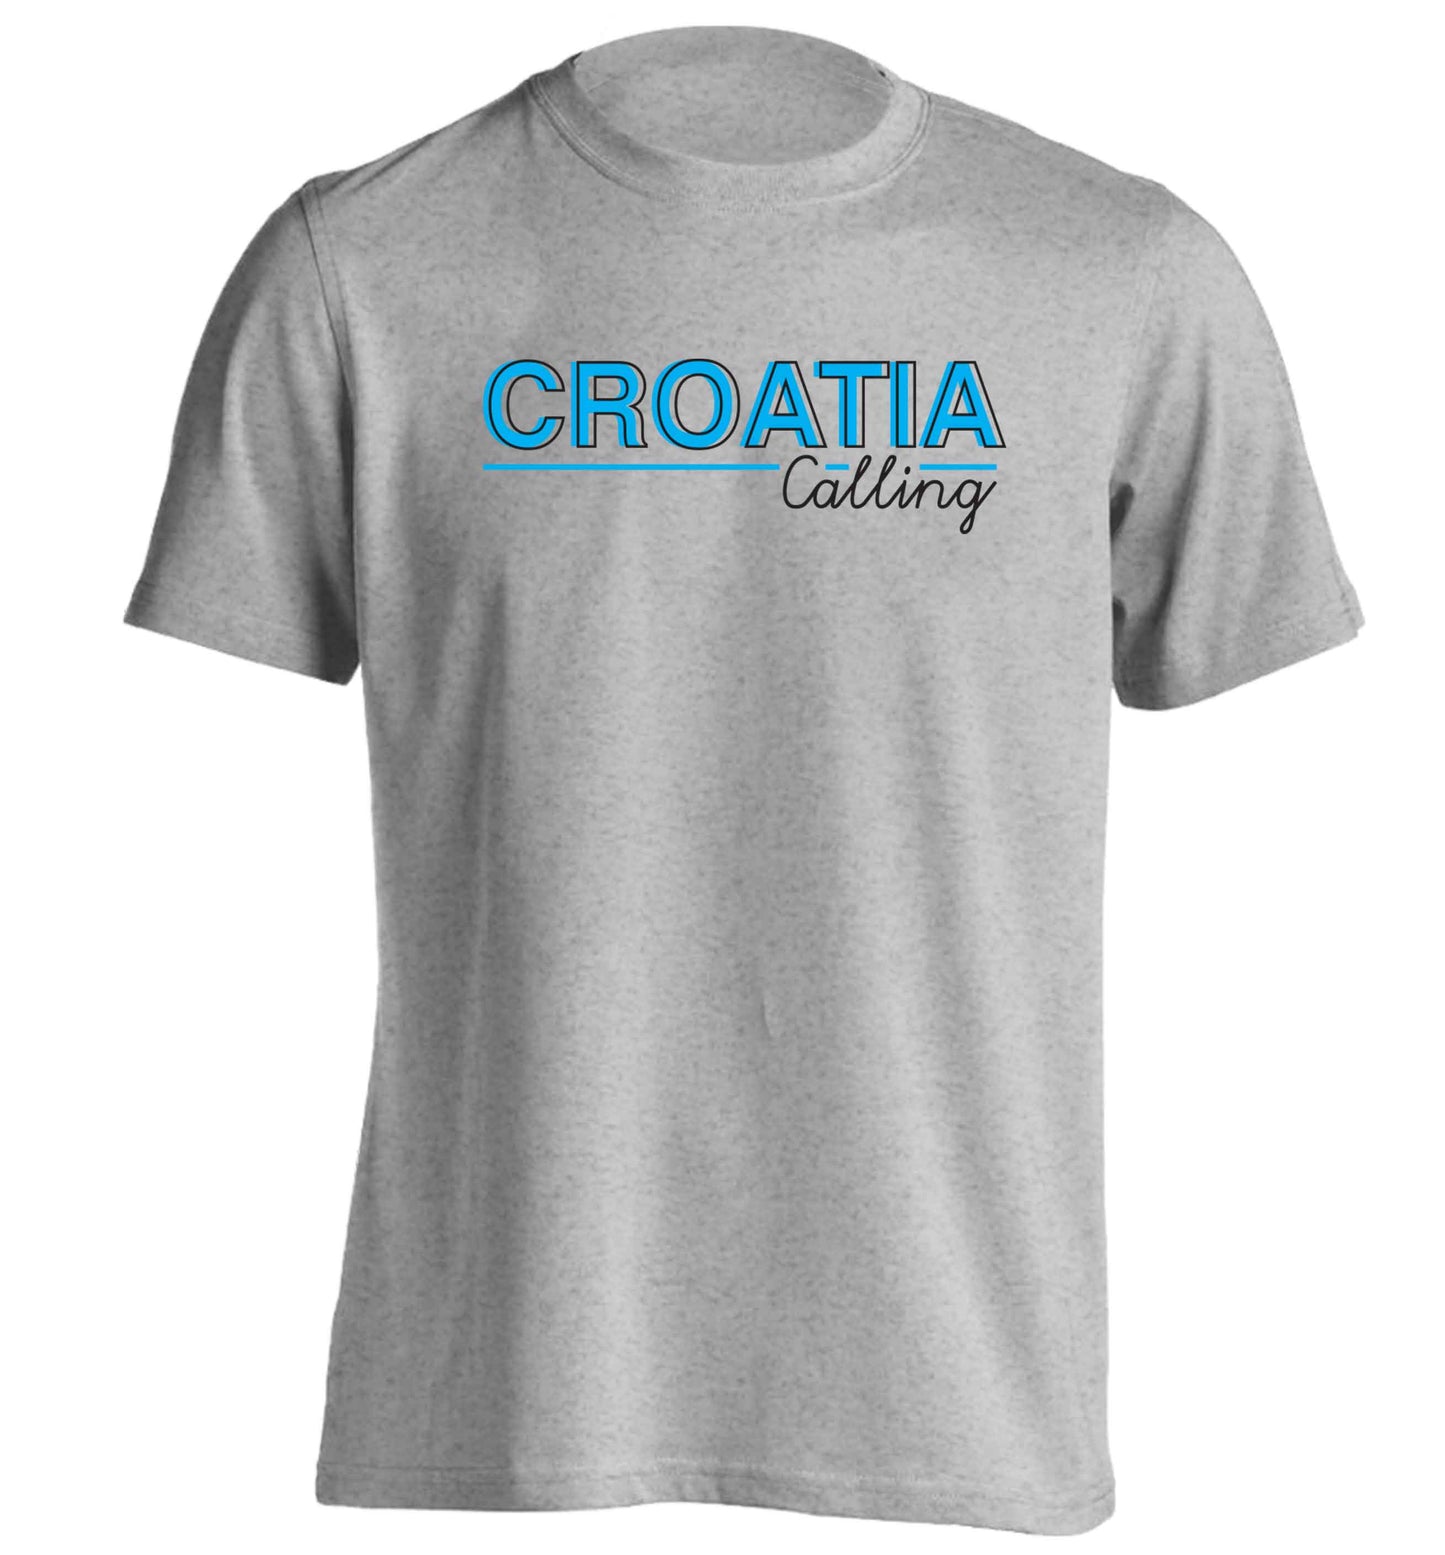 Croatia calling adults unisex grey Tshirt 2XL